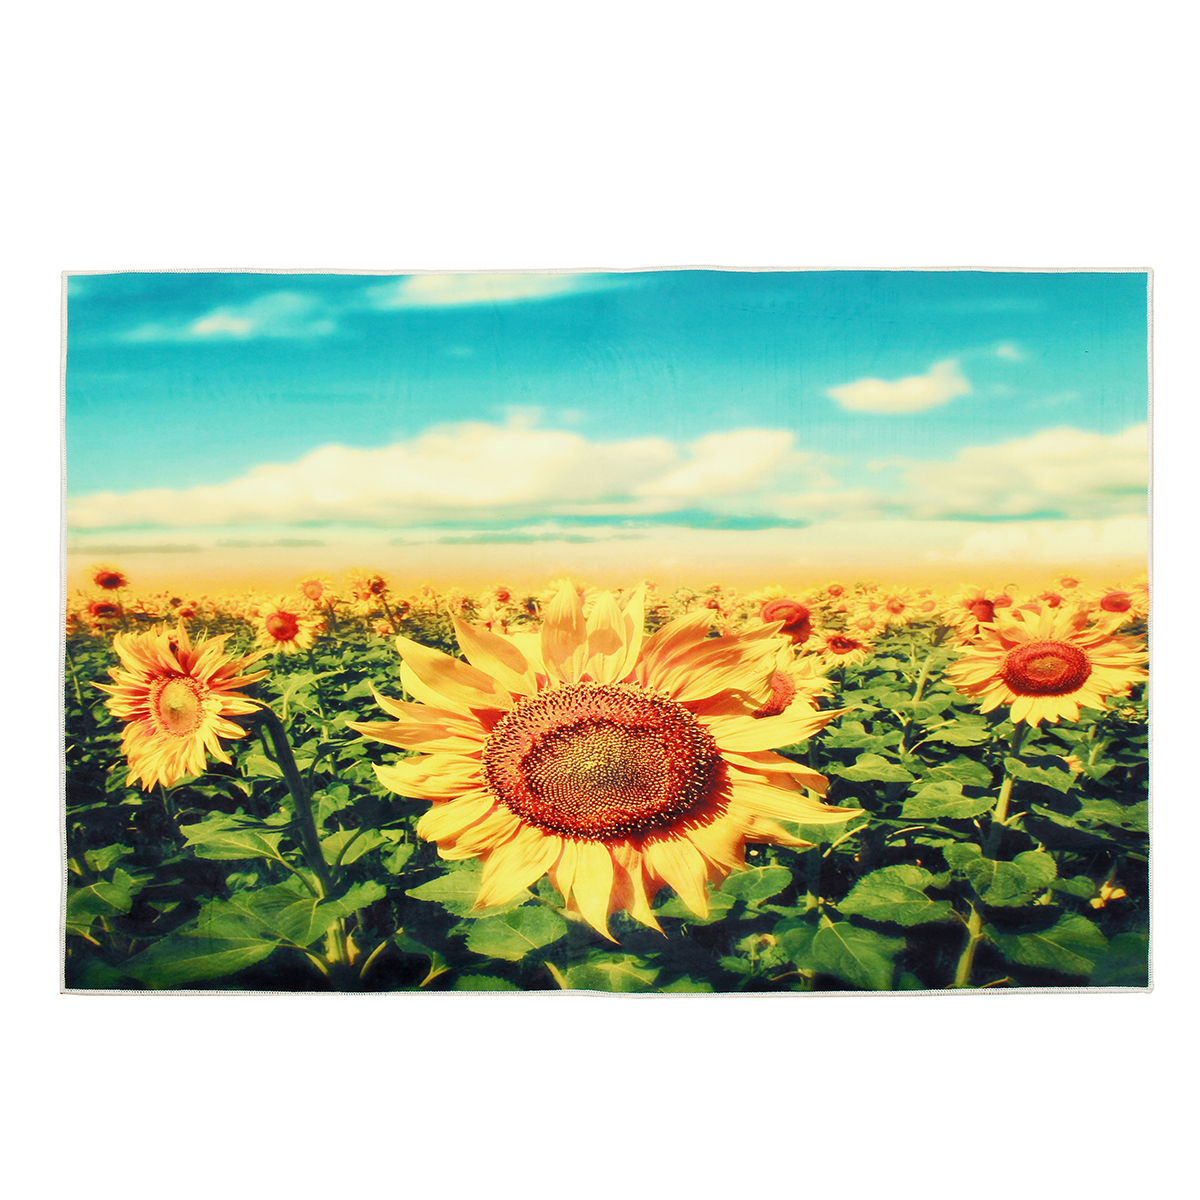 Gold-Sunflower-Area-Floor-Rug-Carpet-For-Bedroom-Living-Room-Home-Decoration-1404118-11